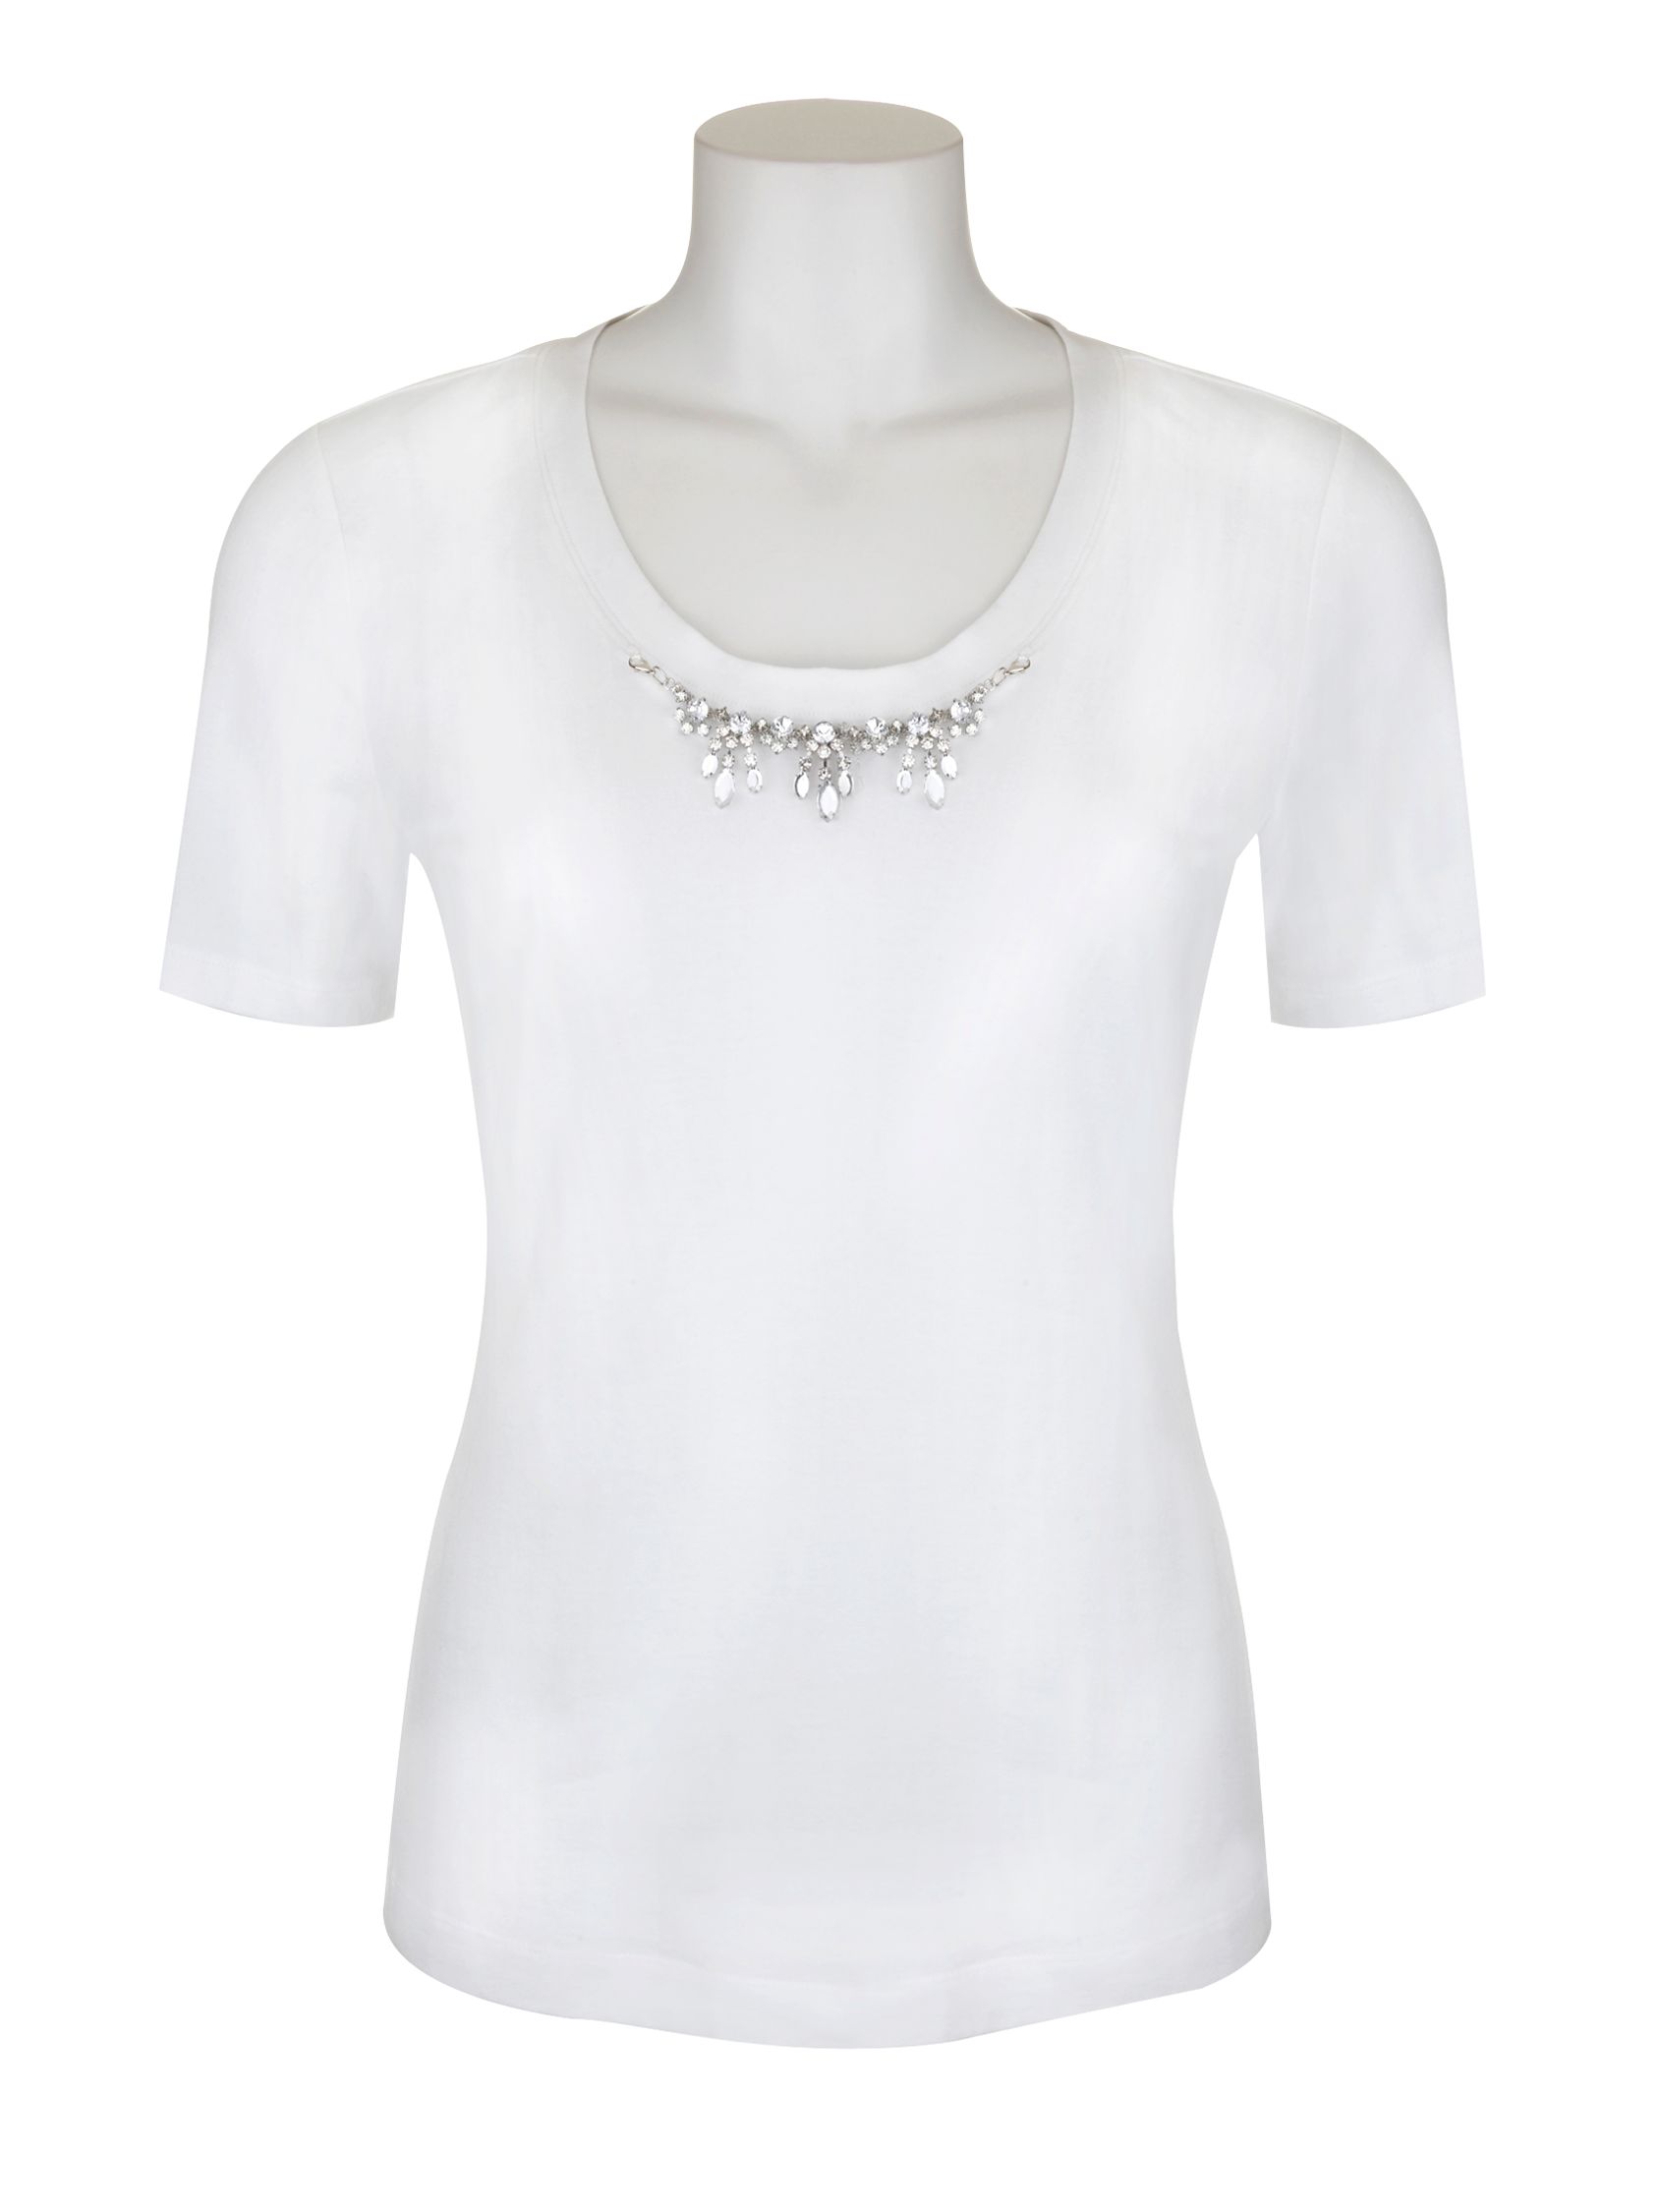 Fenn Wright Manson FWM Cotton Lycra Gem T-Shirt, White